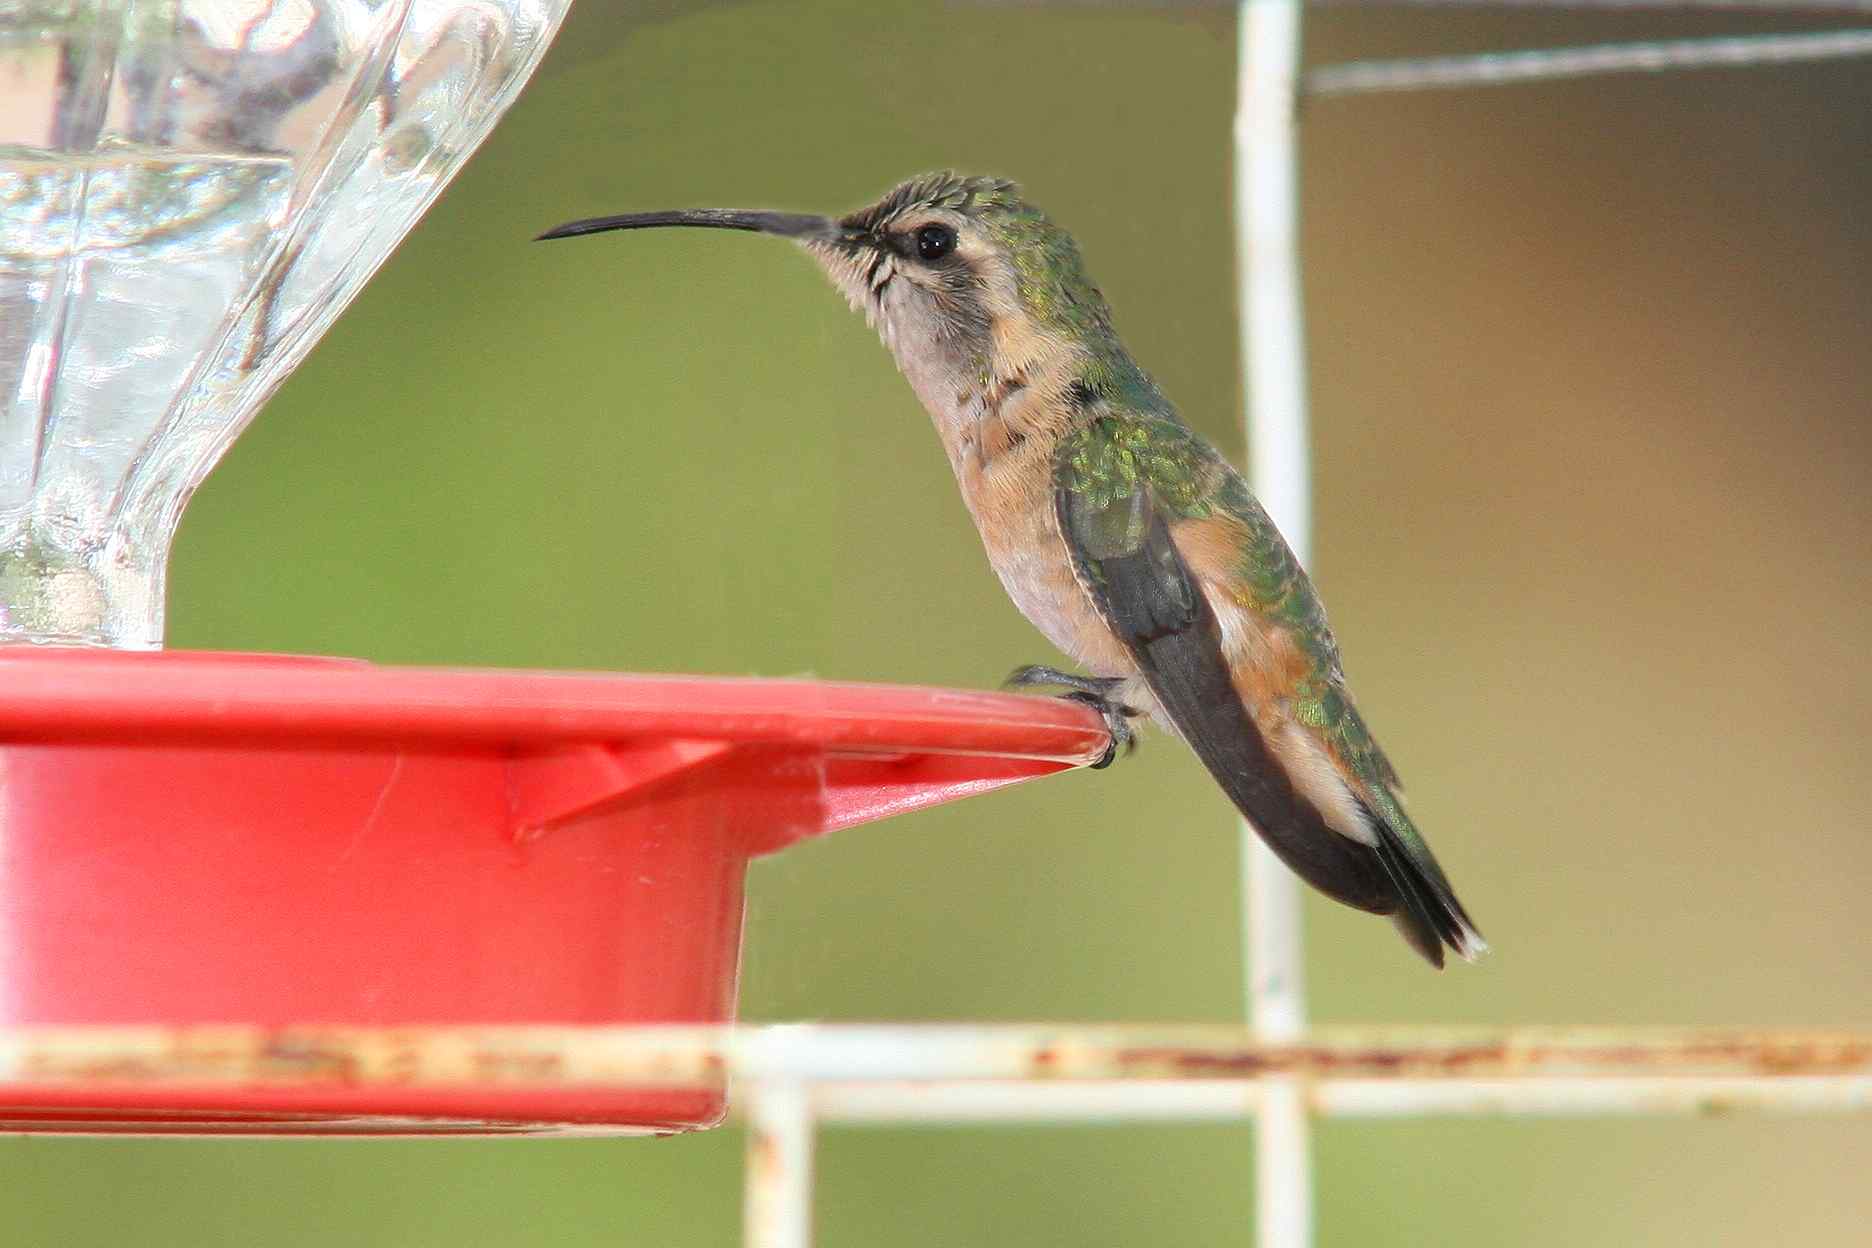 Lucifer Hummingbird -spring female- (Arizona)